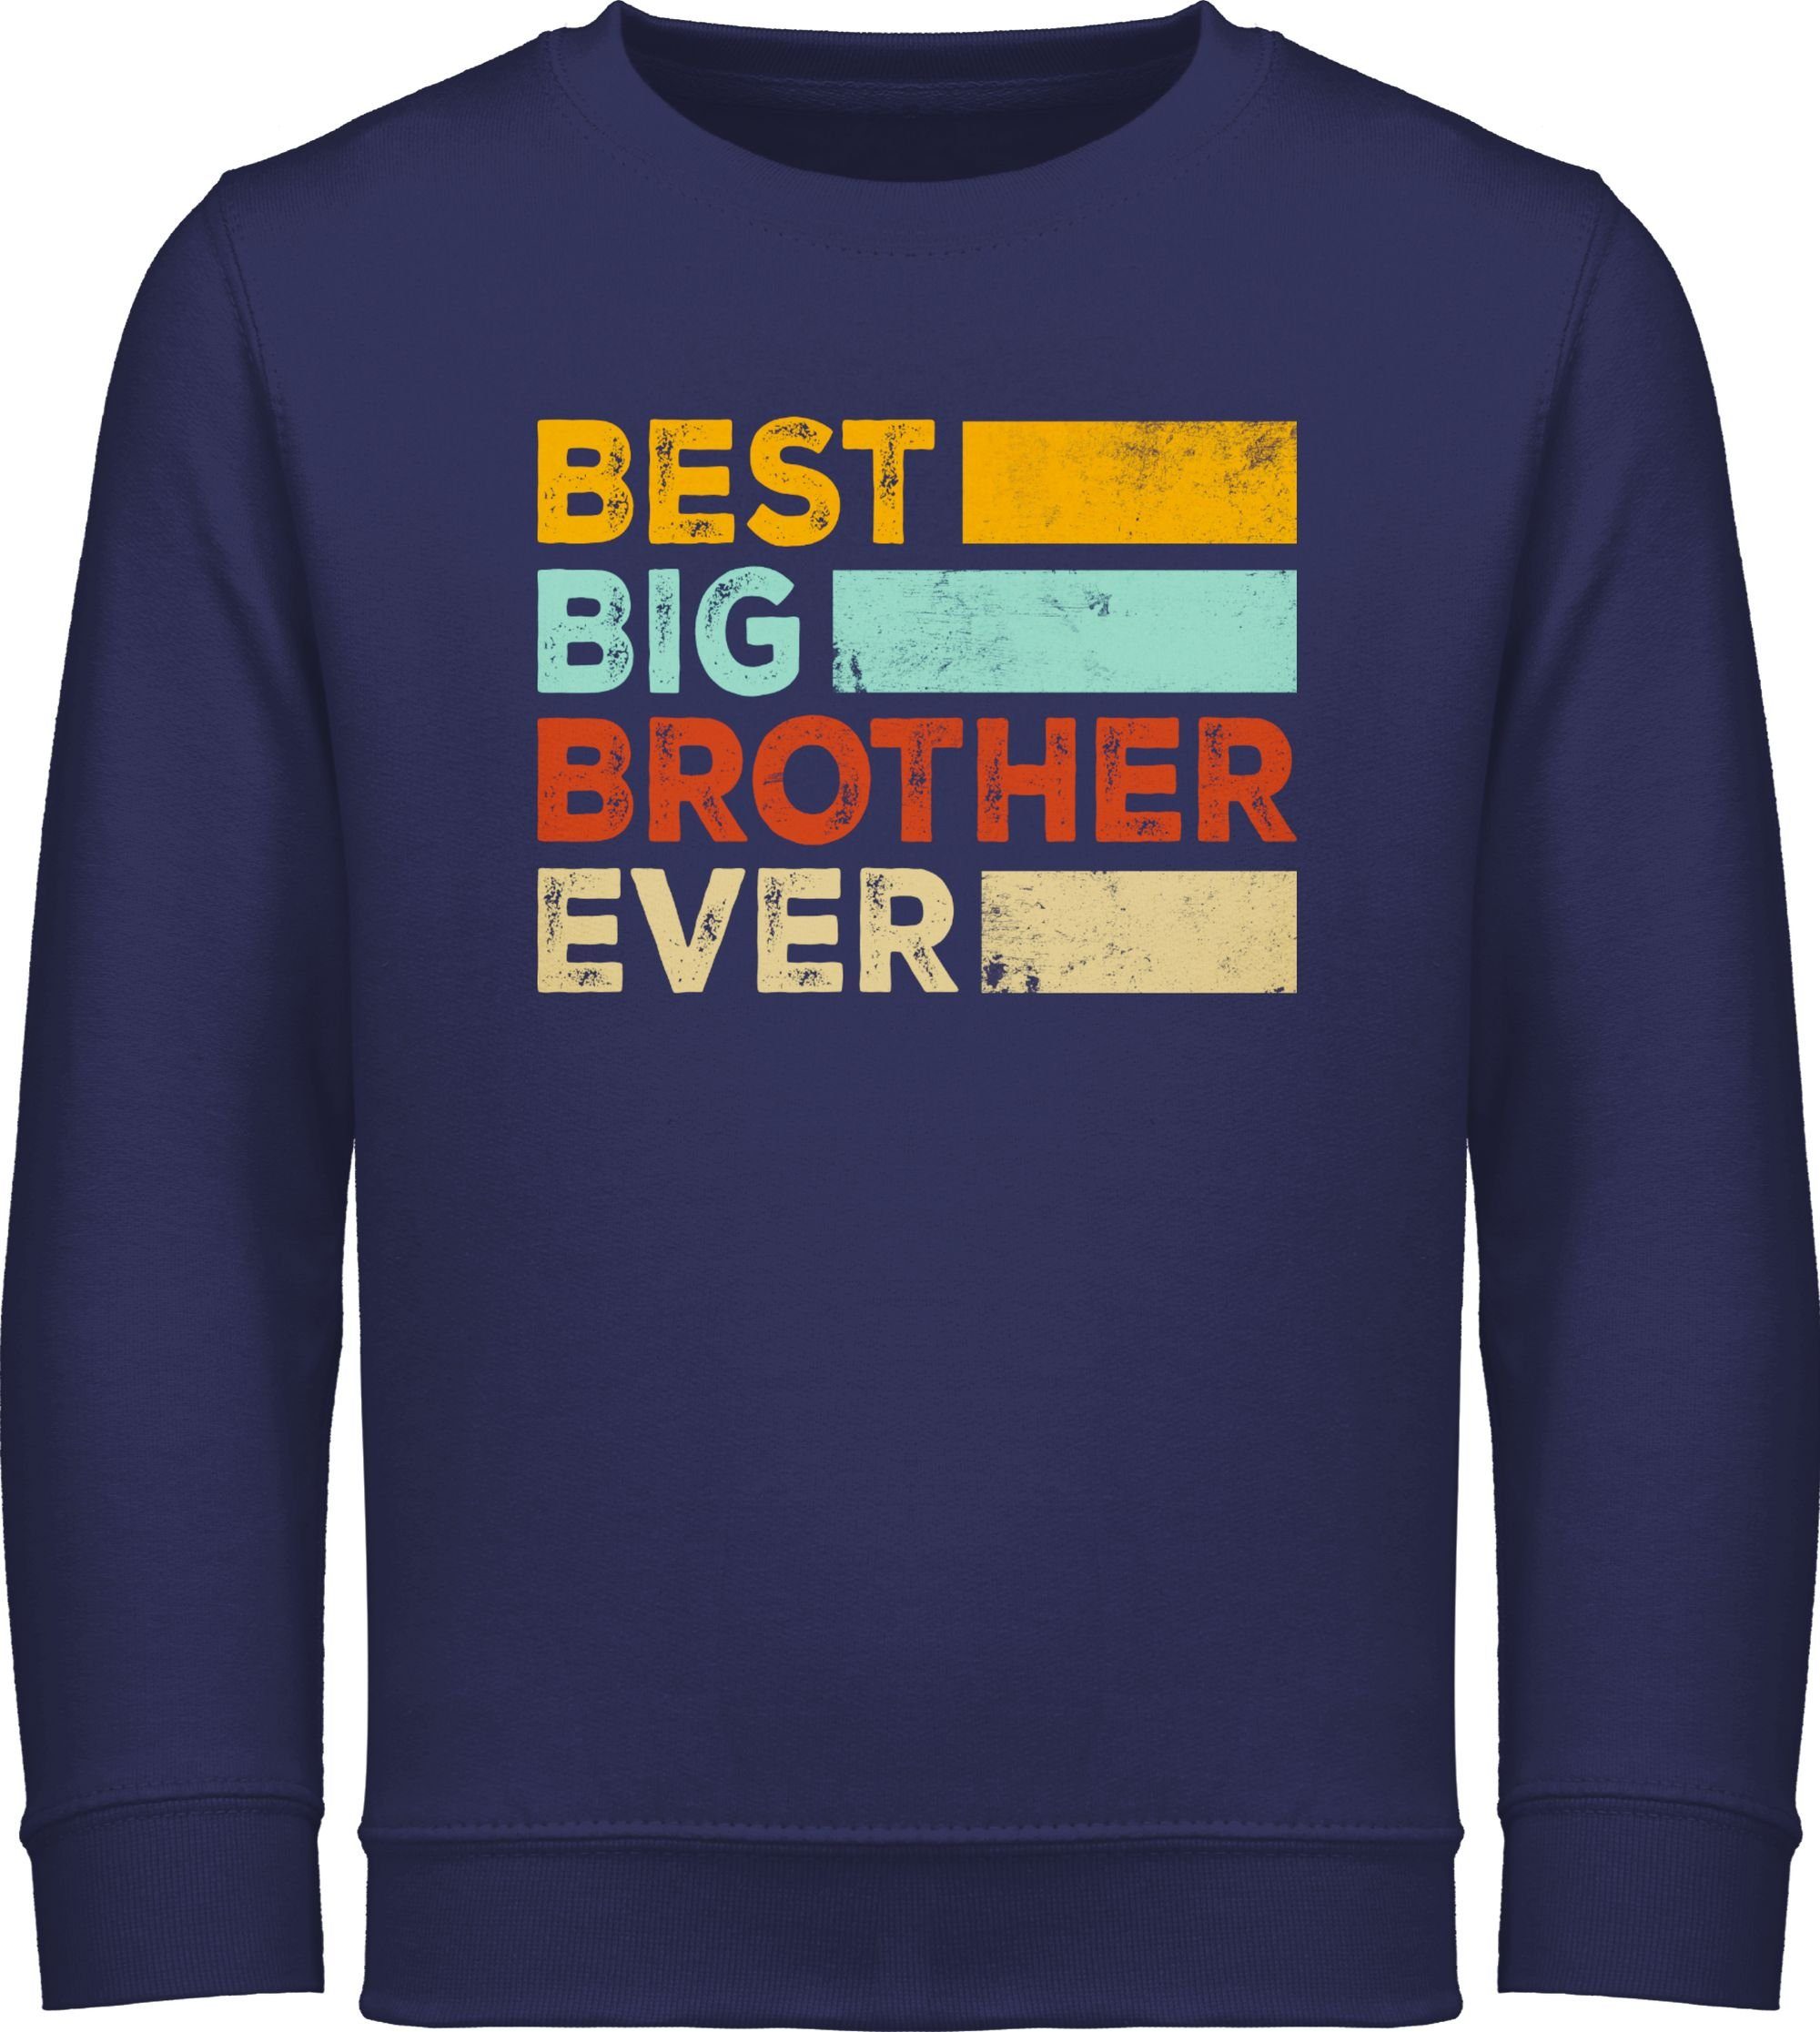 Shirtracer Sweatshirt Best Big Brother Ever Bester großer Bruder aller Zeiten Geschenk Großer Bruder 1 Navy Blau